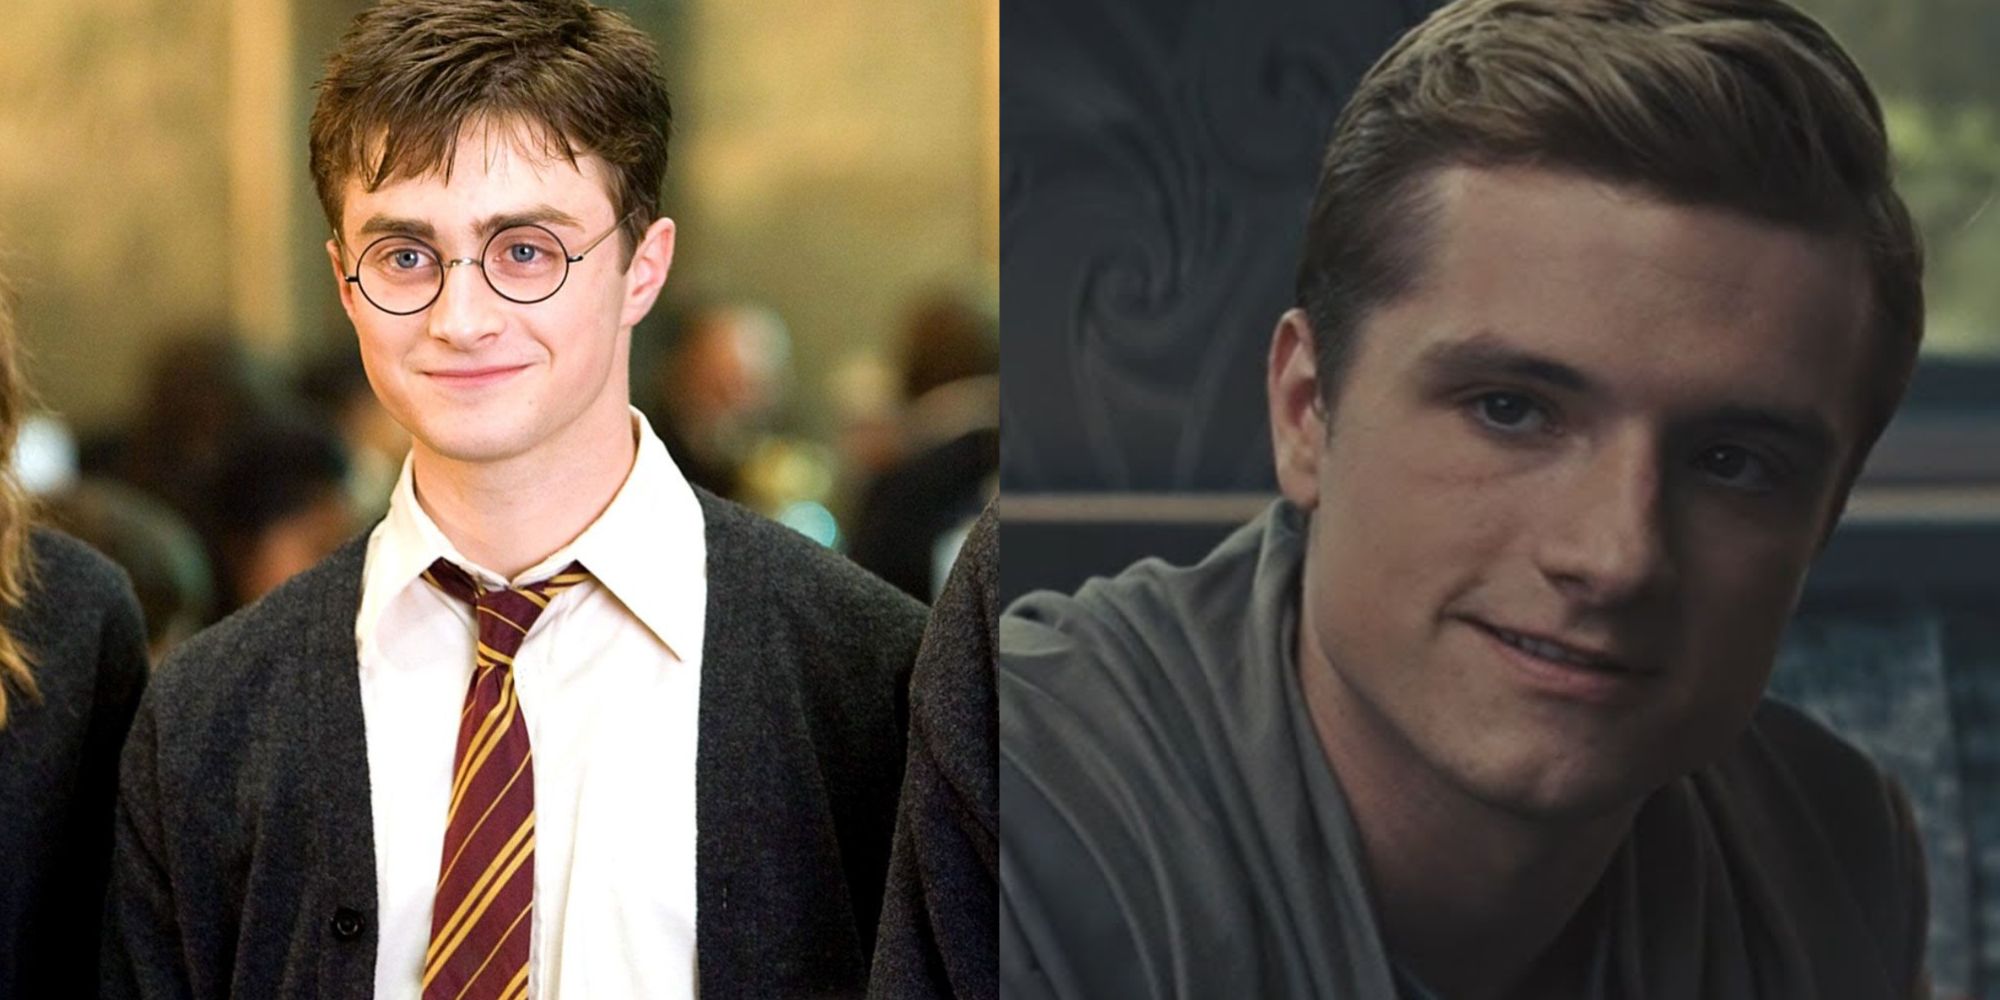 Split images of Harry Potter and Peeta Mellark in The Hunger Games